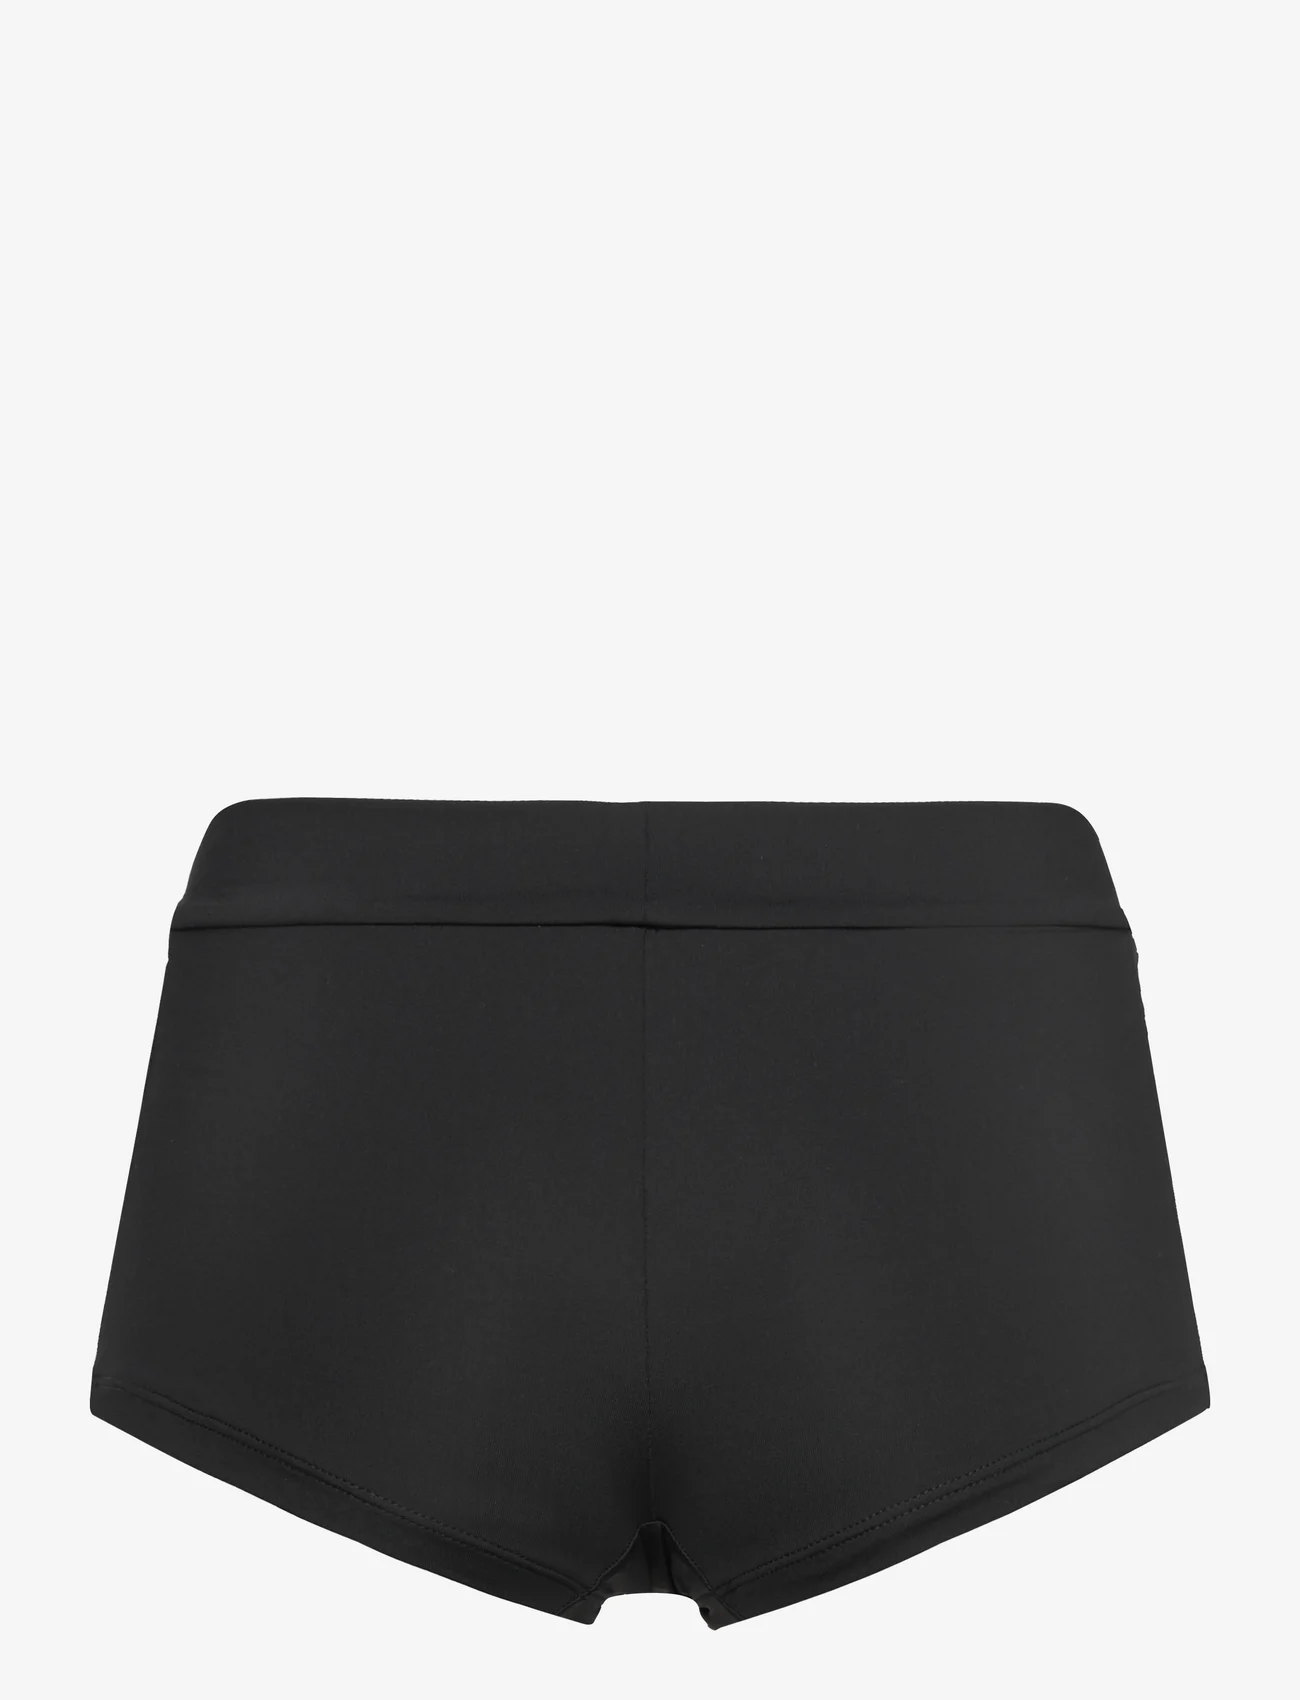 Panos Emporio - Agape Solid Bottom - bikini truser - black - 1